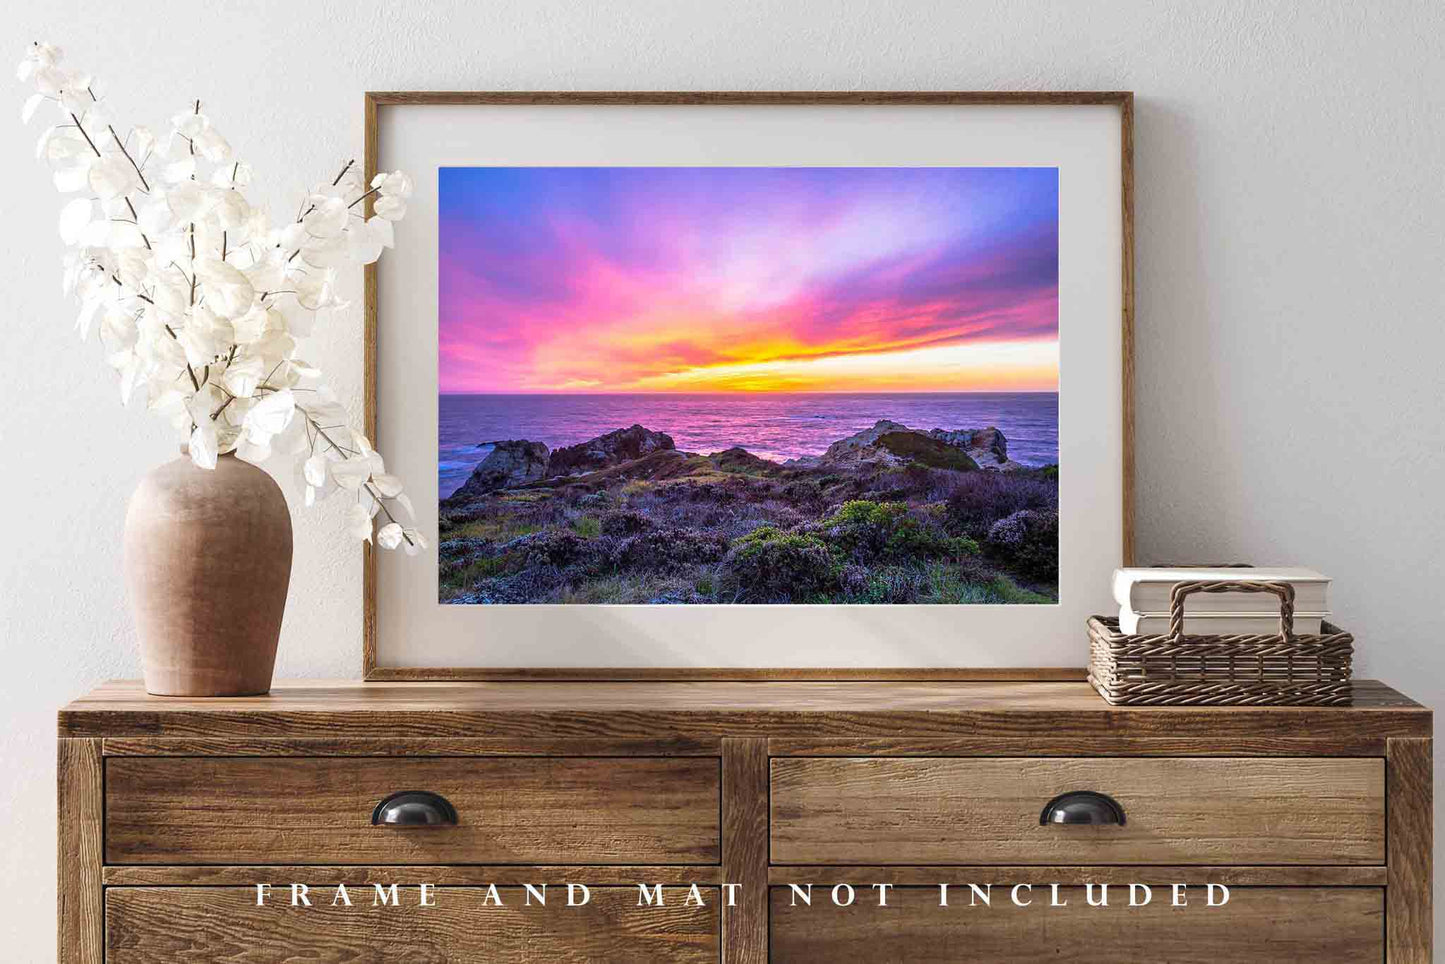 Coastal Picture - Fine Art Seascape Photography Print of Scenic Sunset Along Big Sur Coast in California Pacific Ocean Wall Art Photo Decor